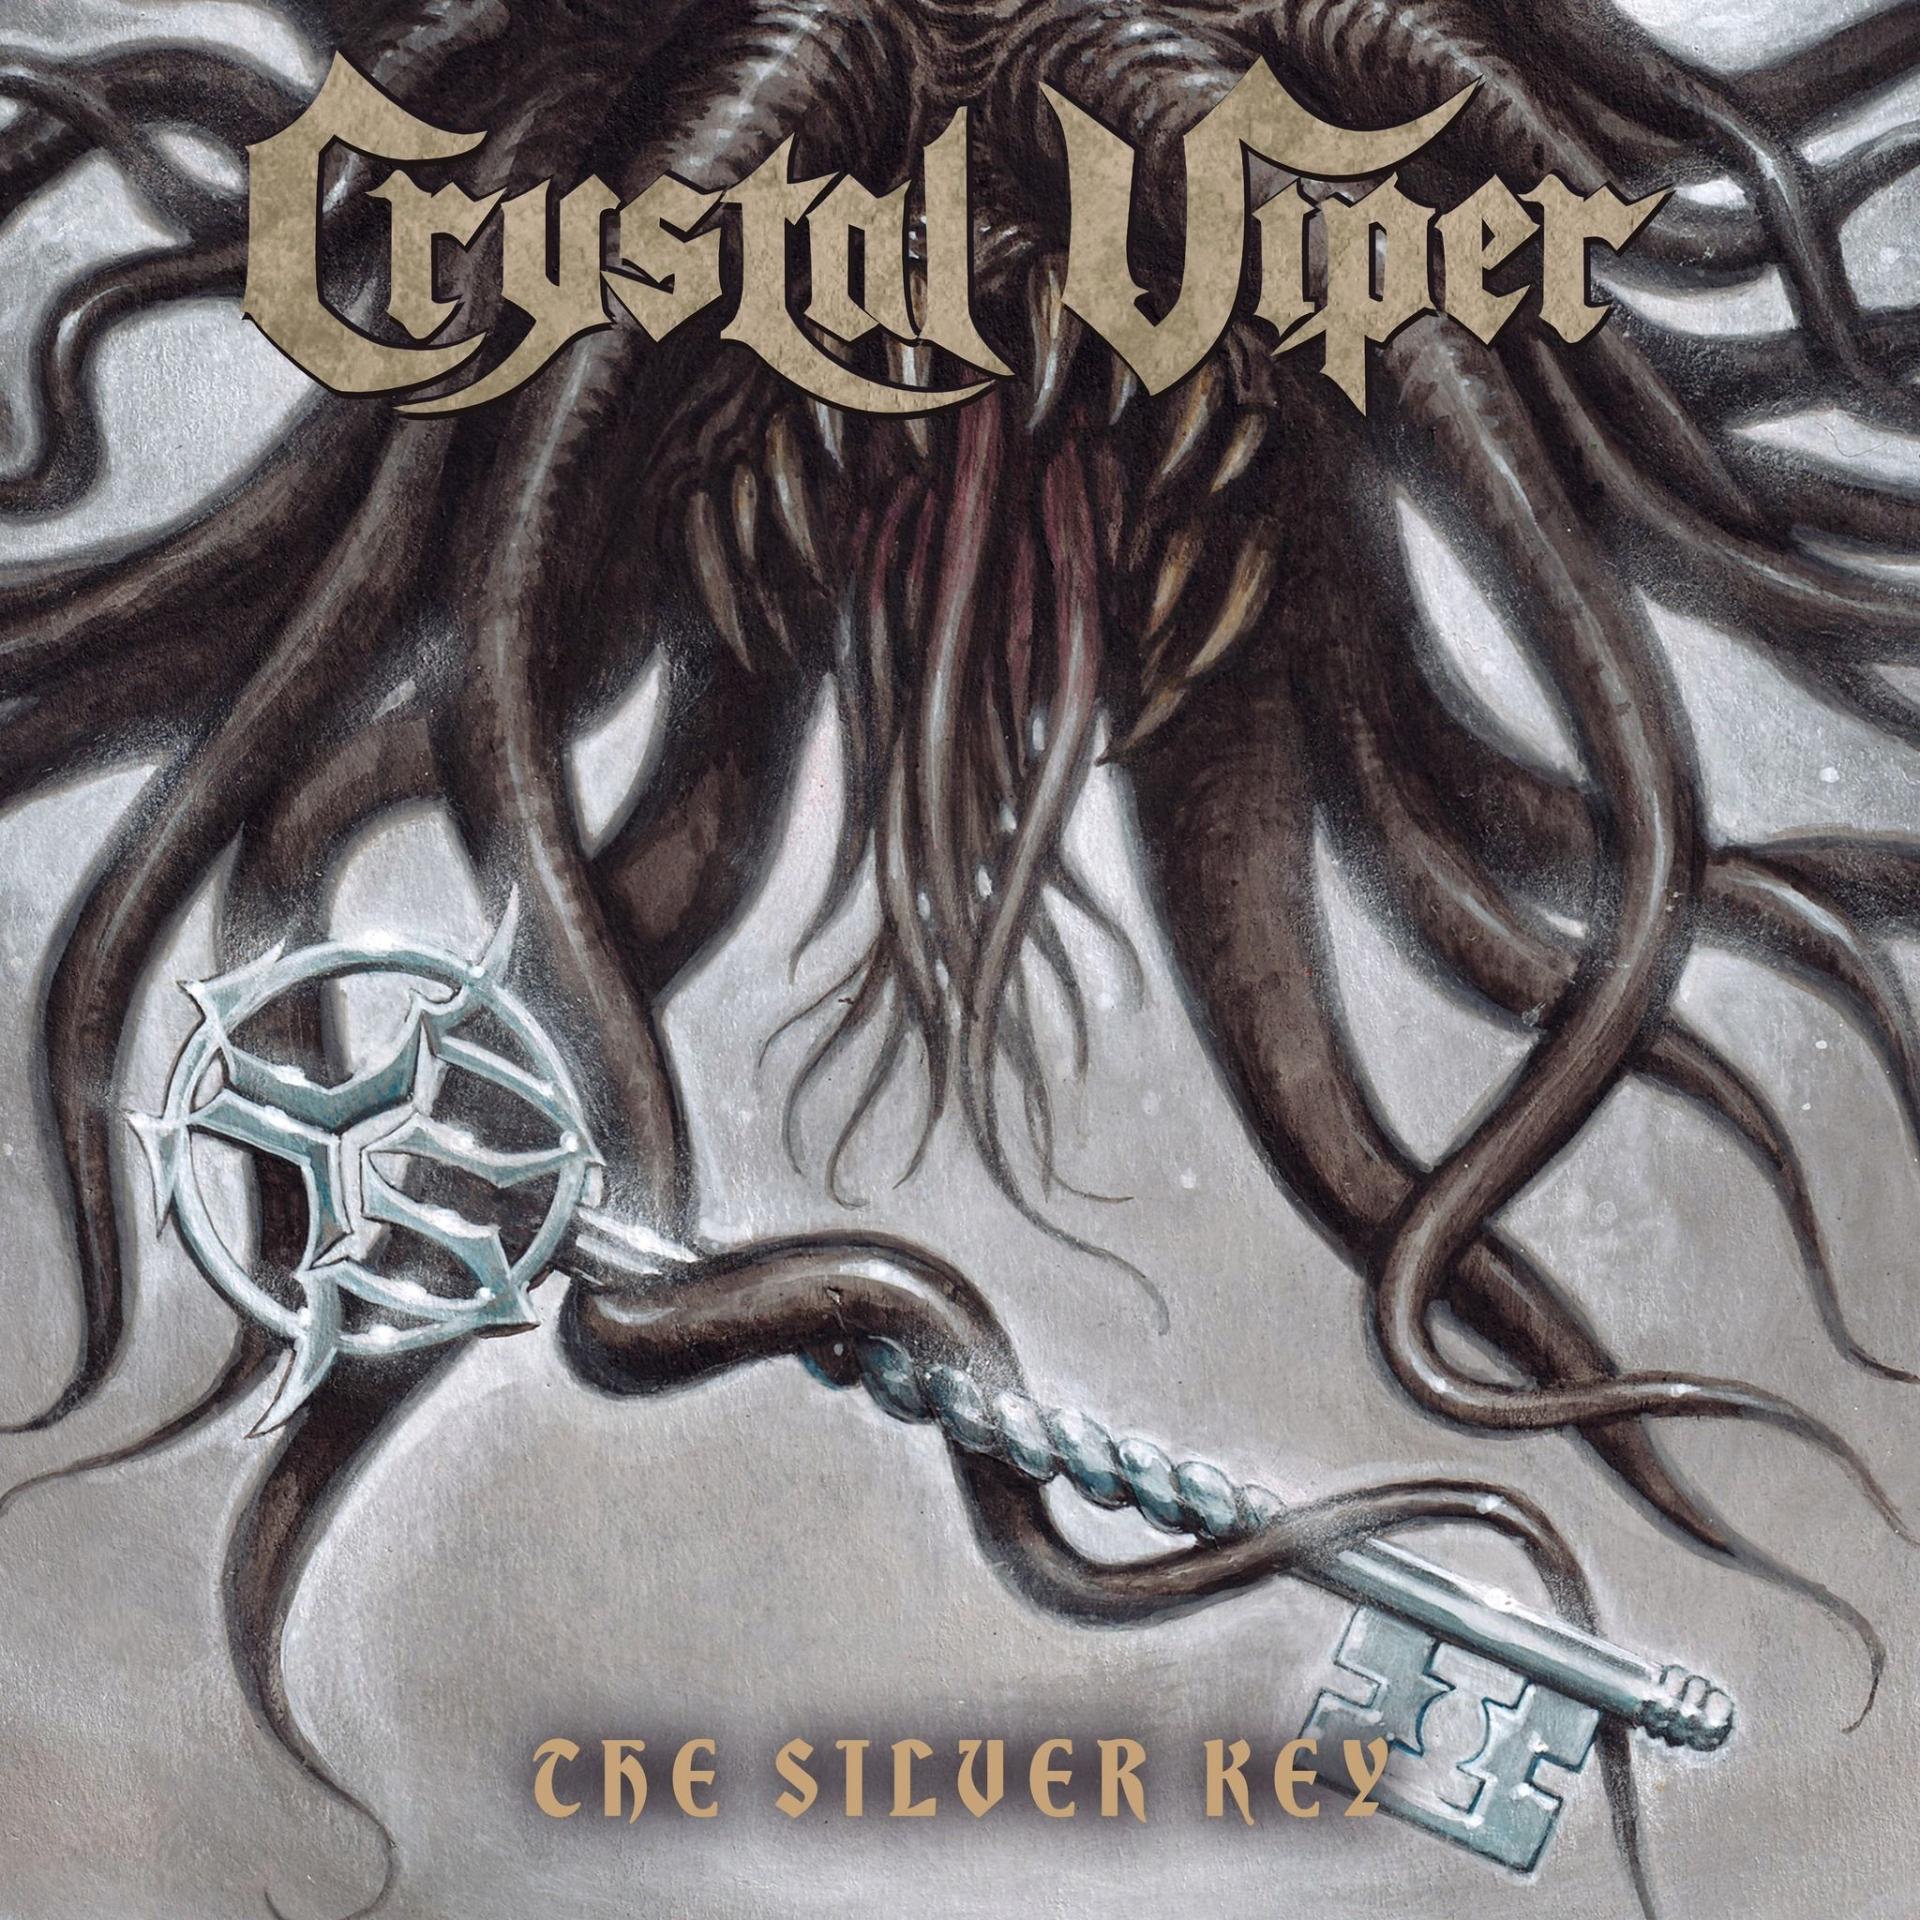 Crystal viper artwork